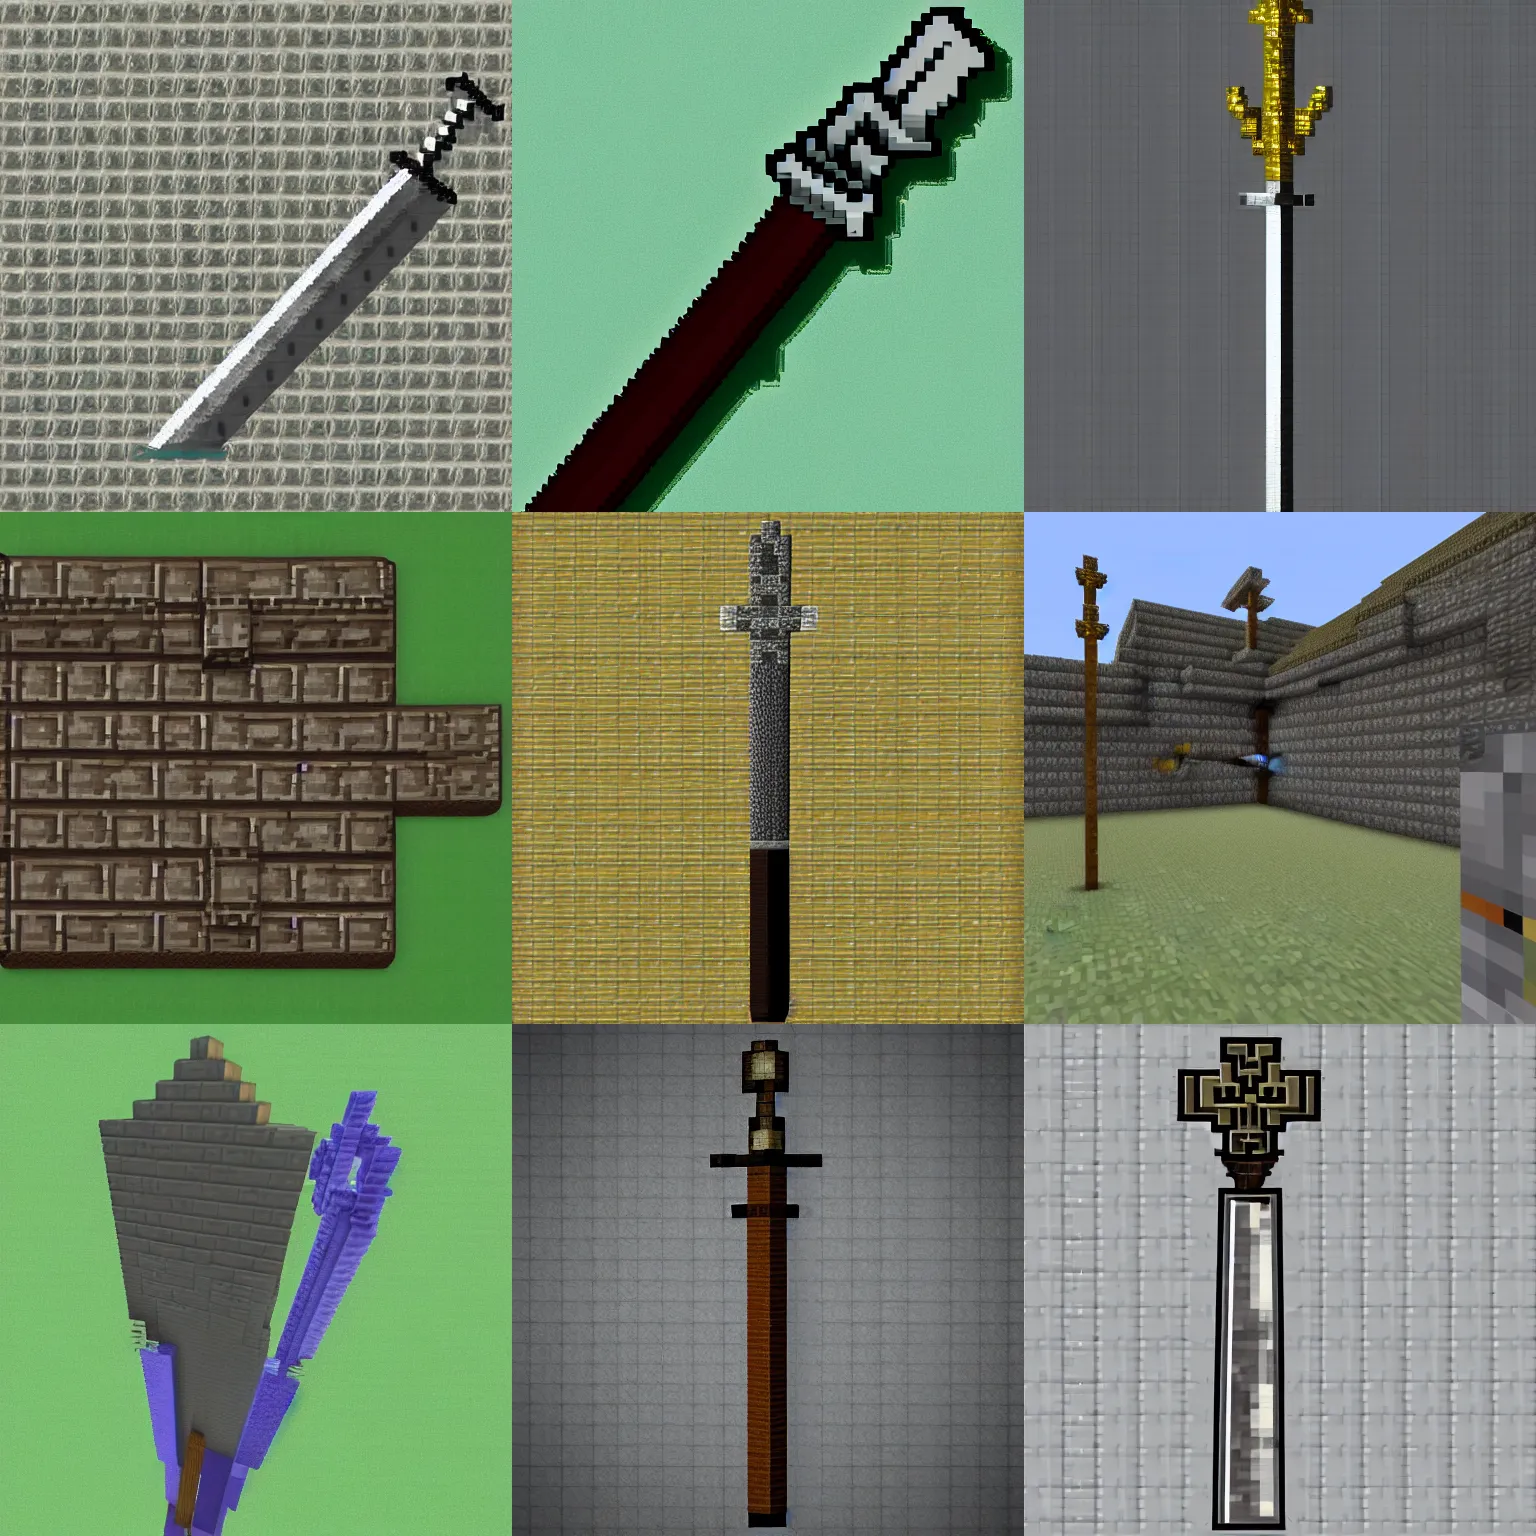 Best Sword Enhancements in Minecraft - Scalacube